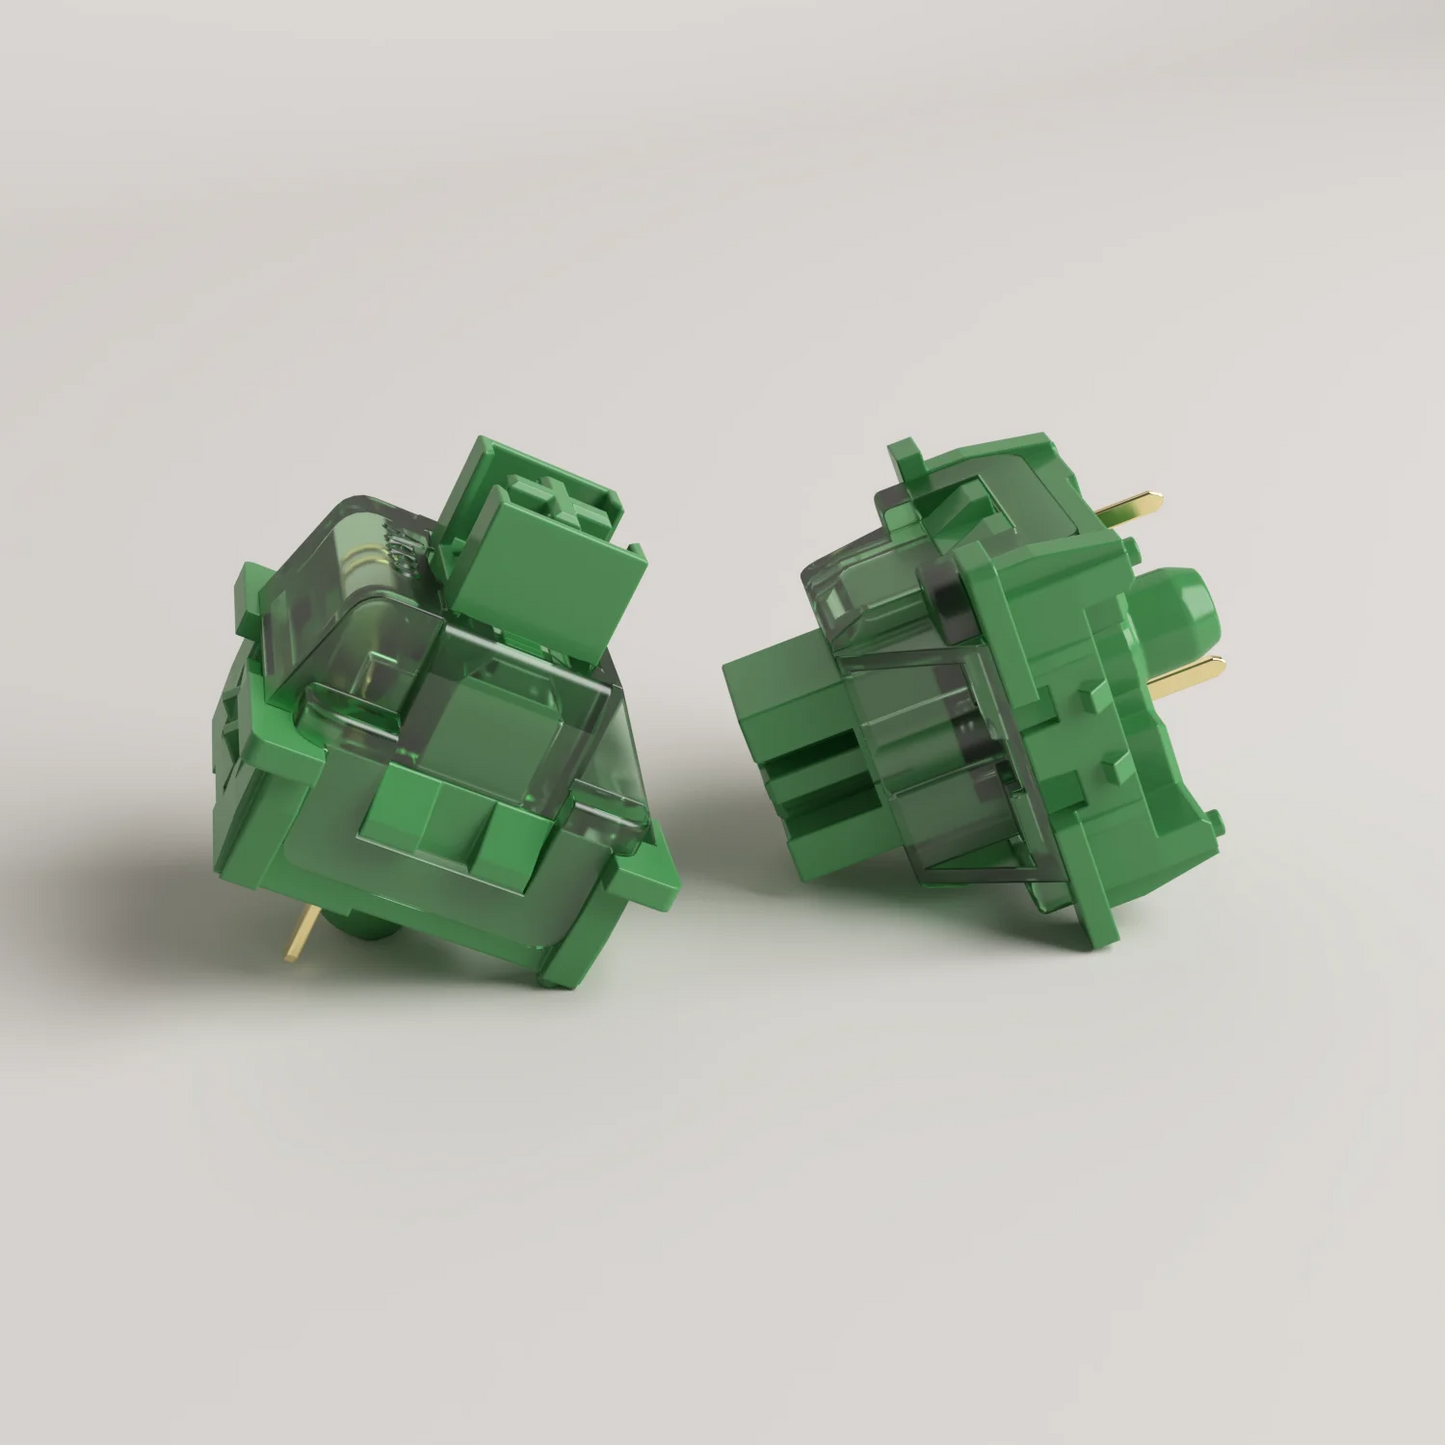 Akko V3 Pro Matcha Green Switches 3 Pin 50gf خطي متوافق مع لوحة المفاتيح الميكانيكية MX